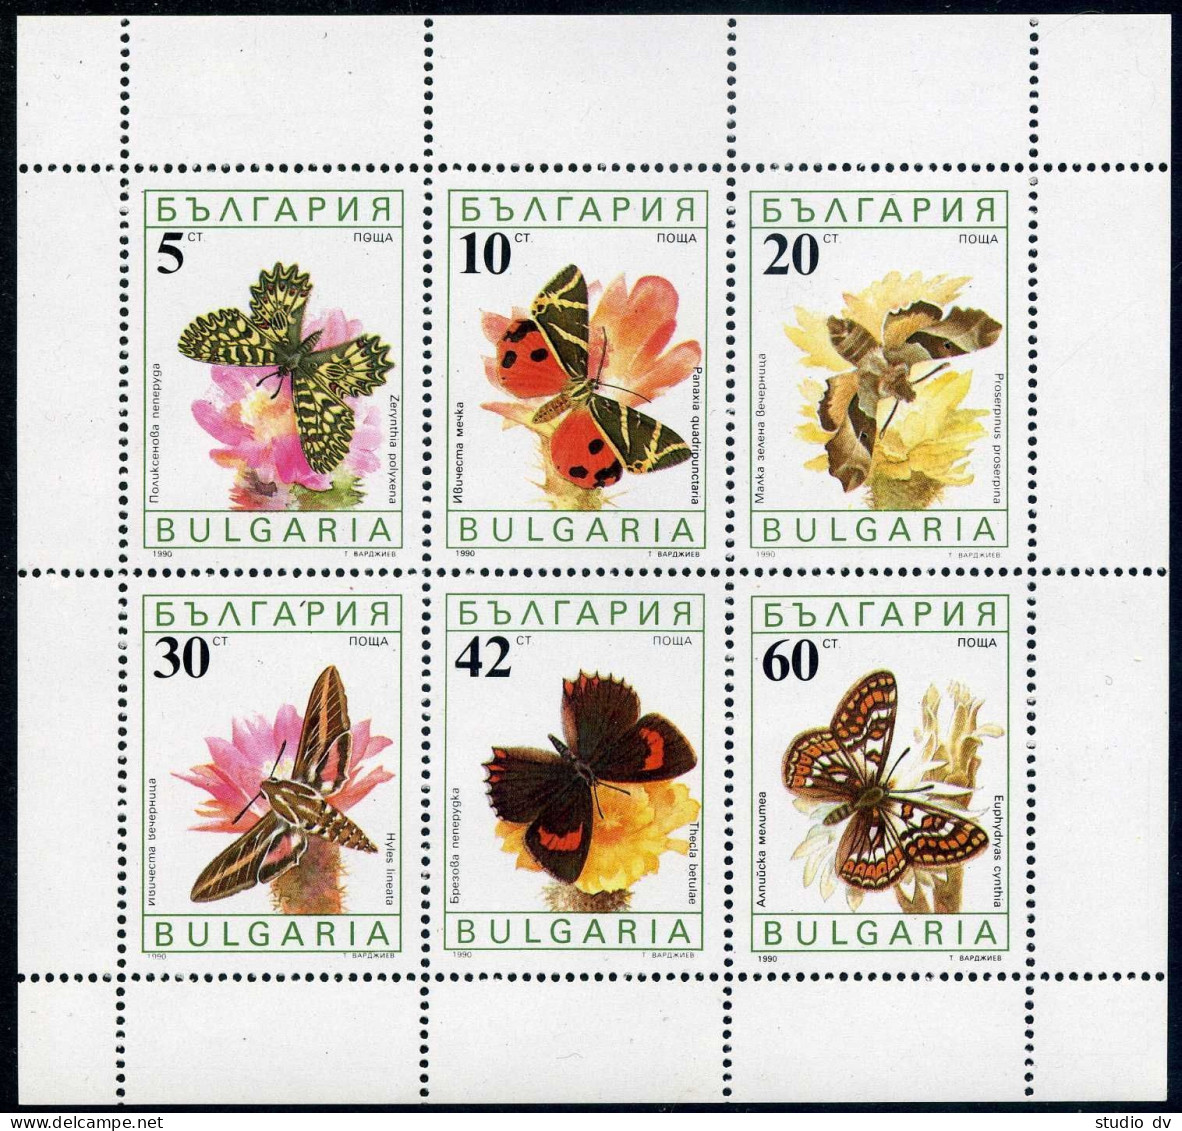 Bulgaria 3556a Sheet,MNH.Michel 3852-3857 Klb. Butterflies And Flowers 1990. - Nuovi